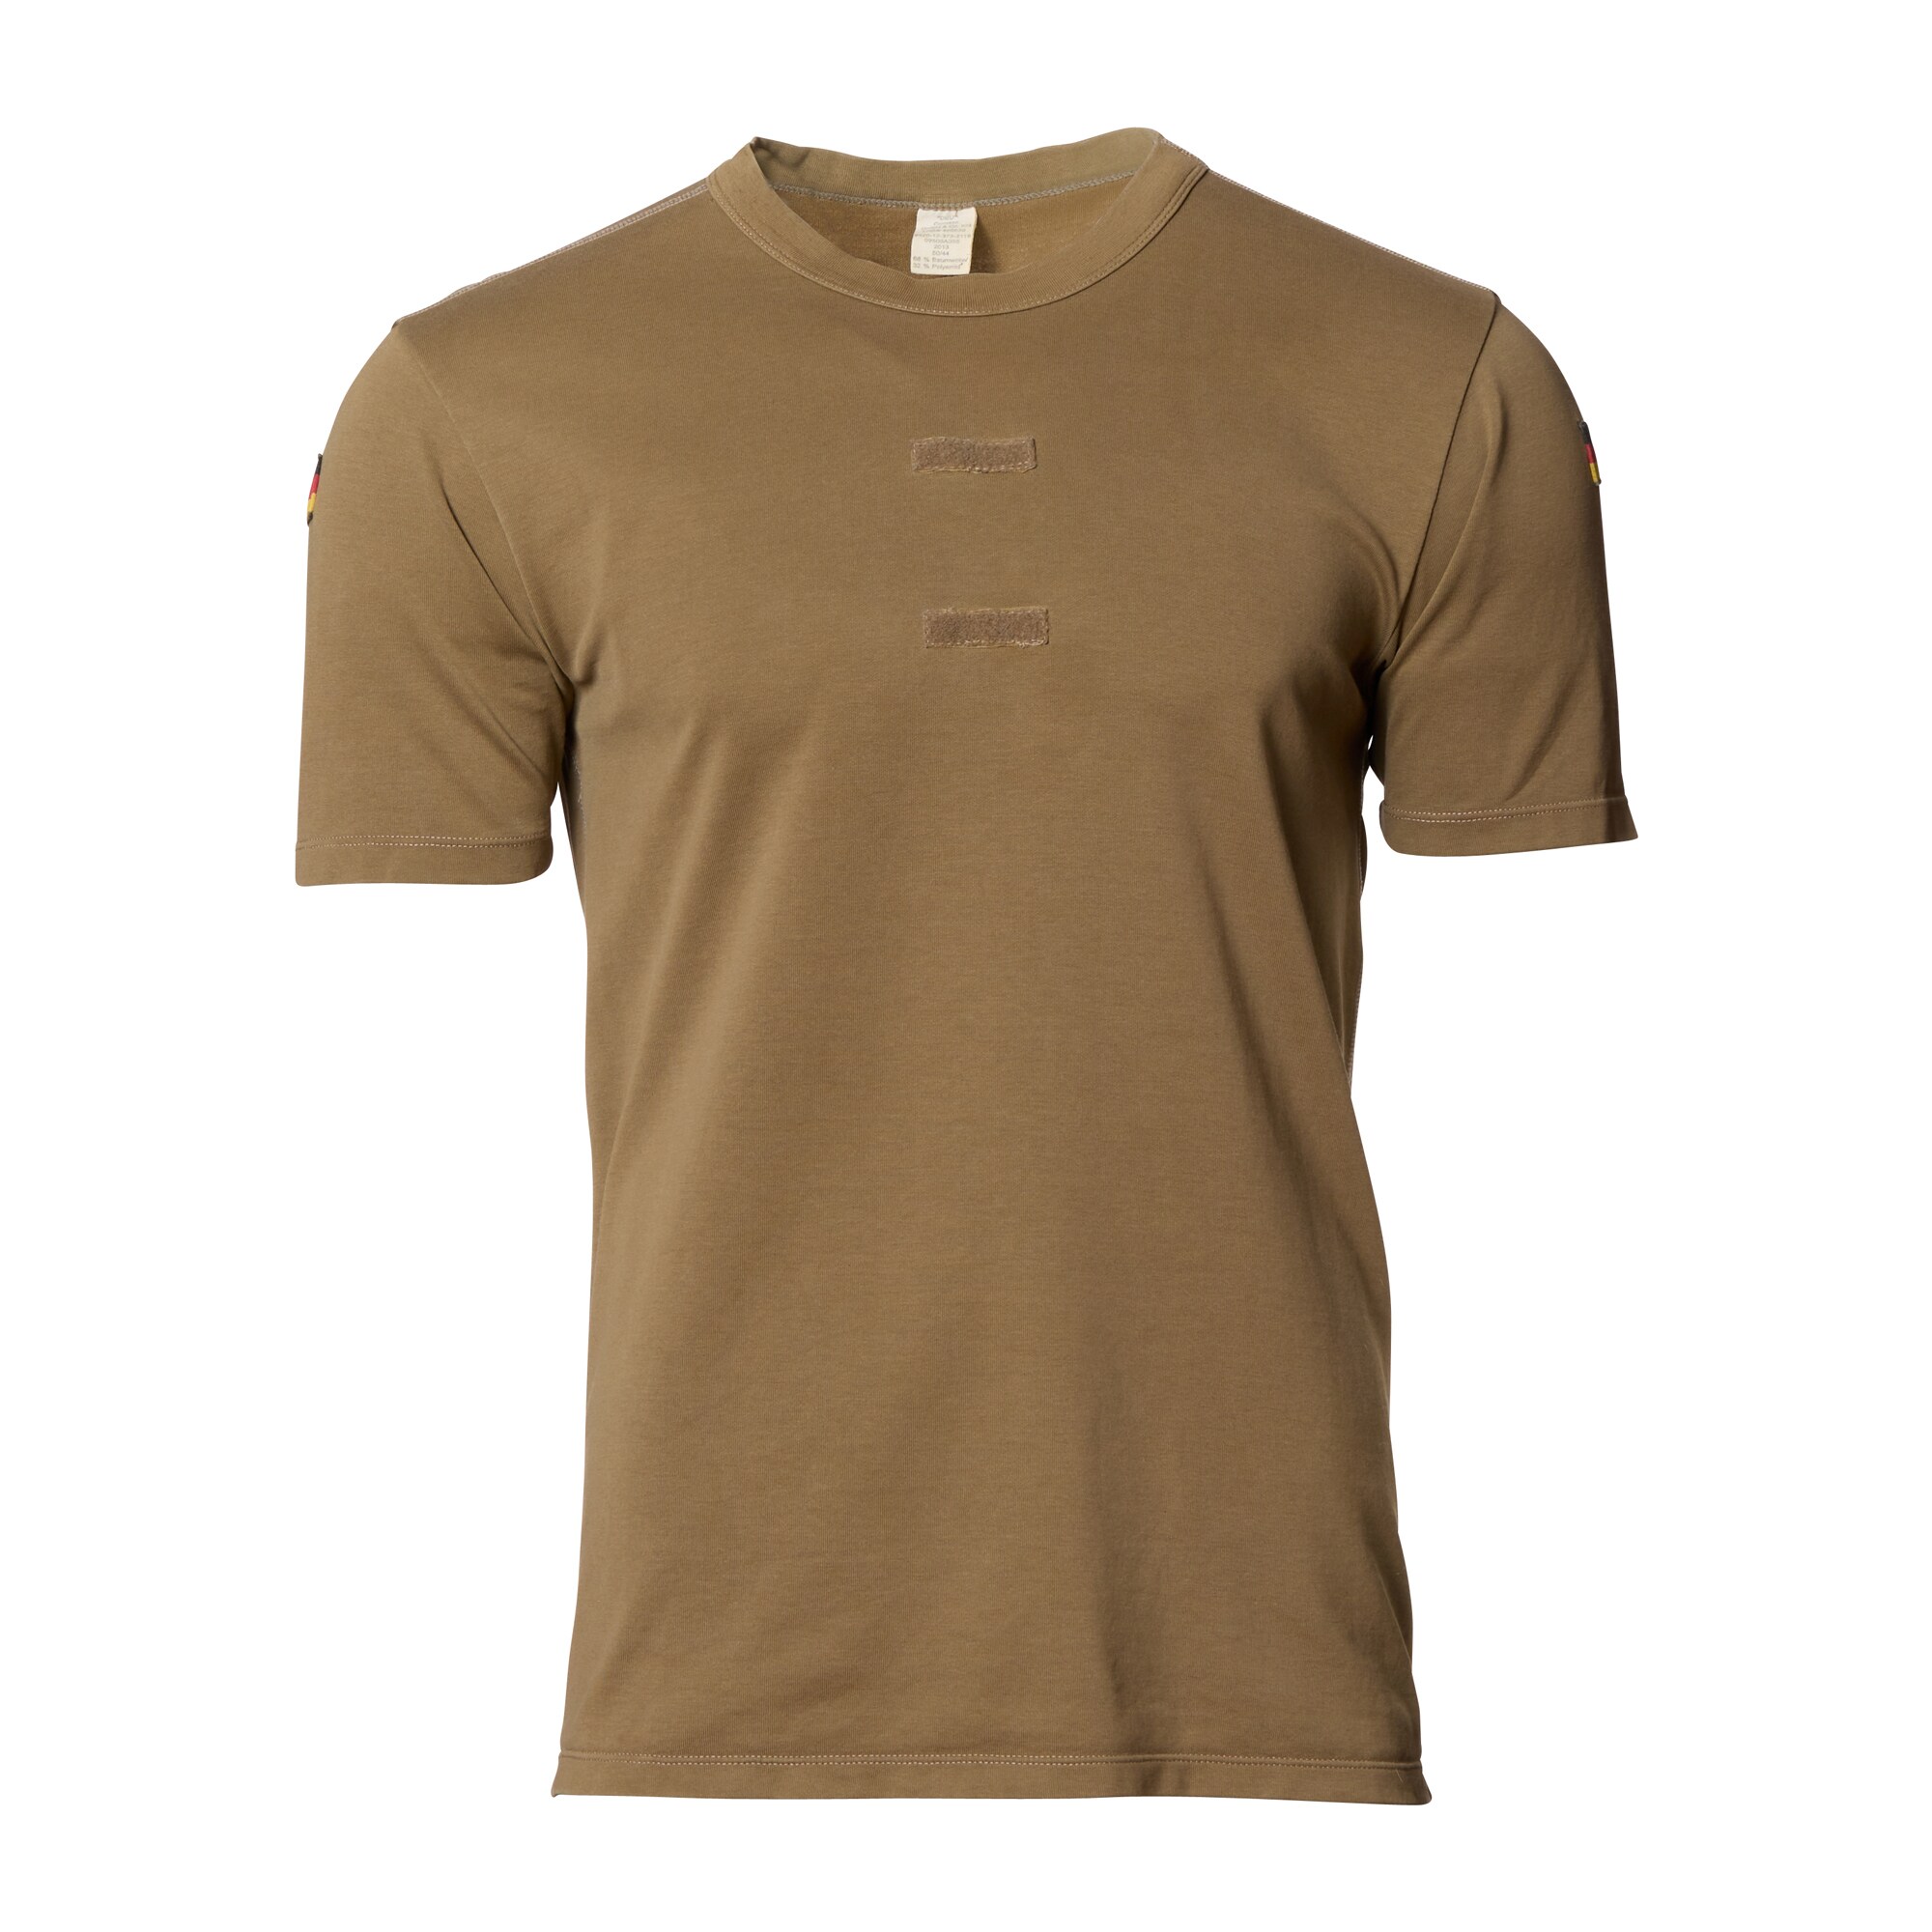 Original Bundeswehr BW Tropen Unterhemd T-Shirt khaki Shirt 